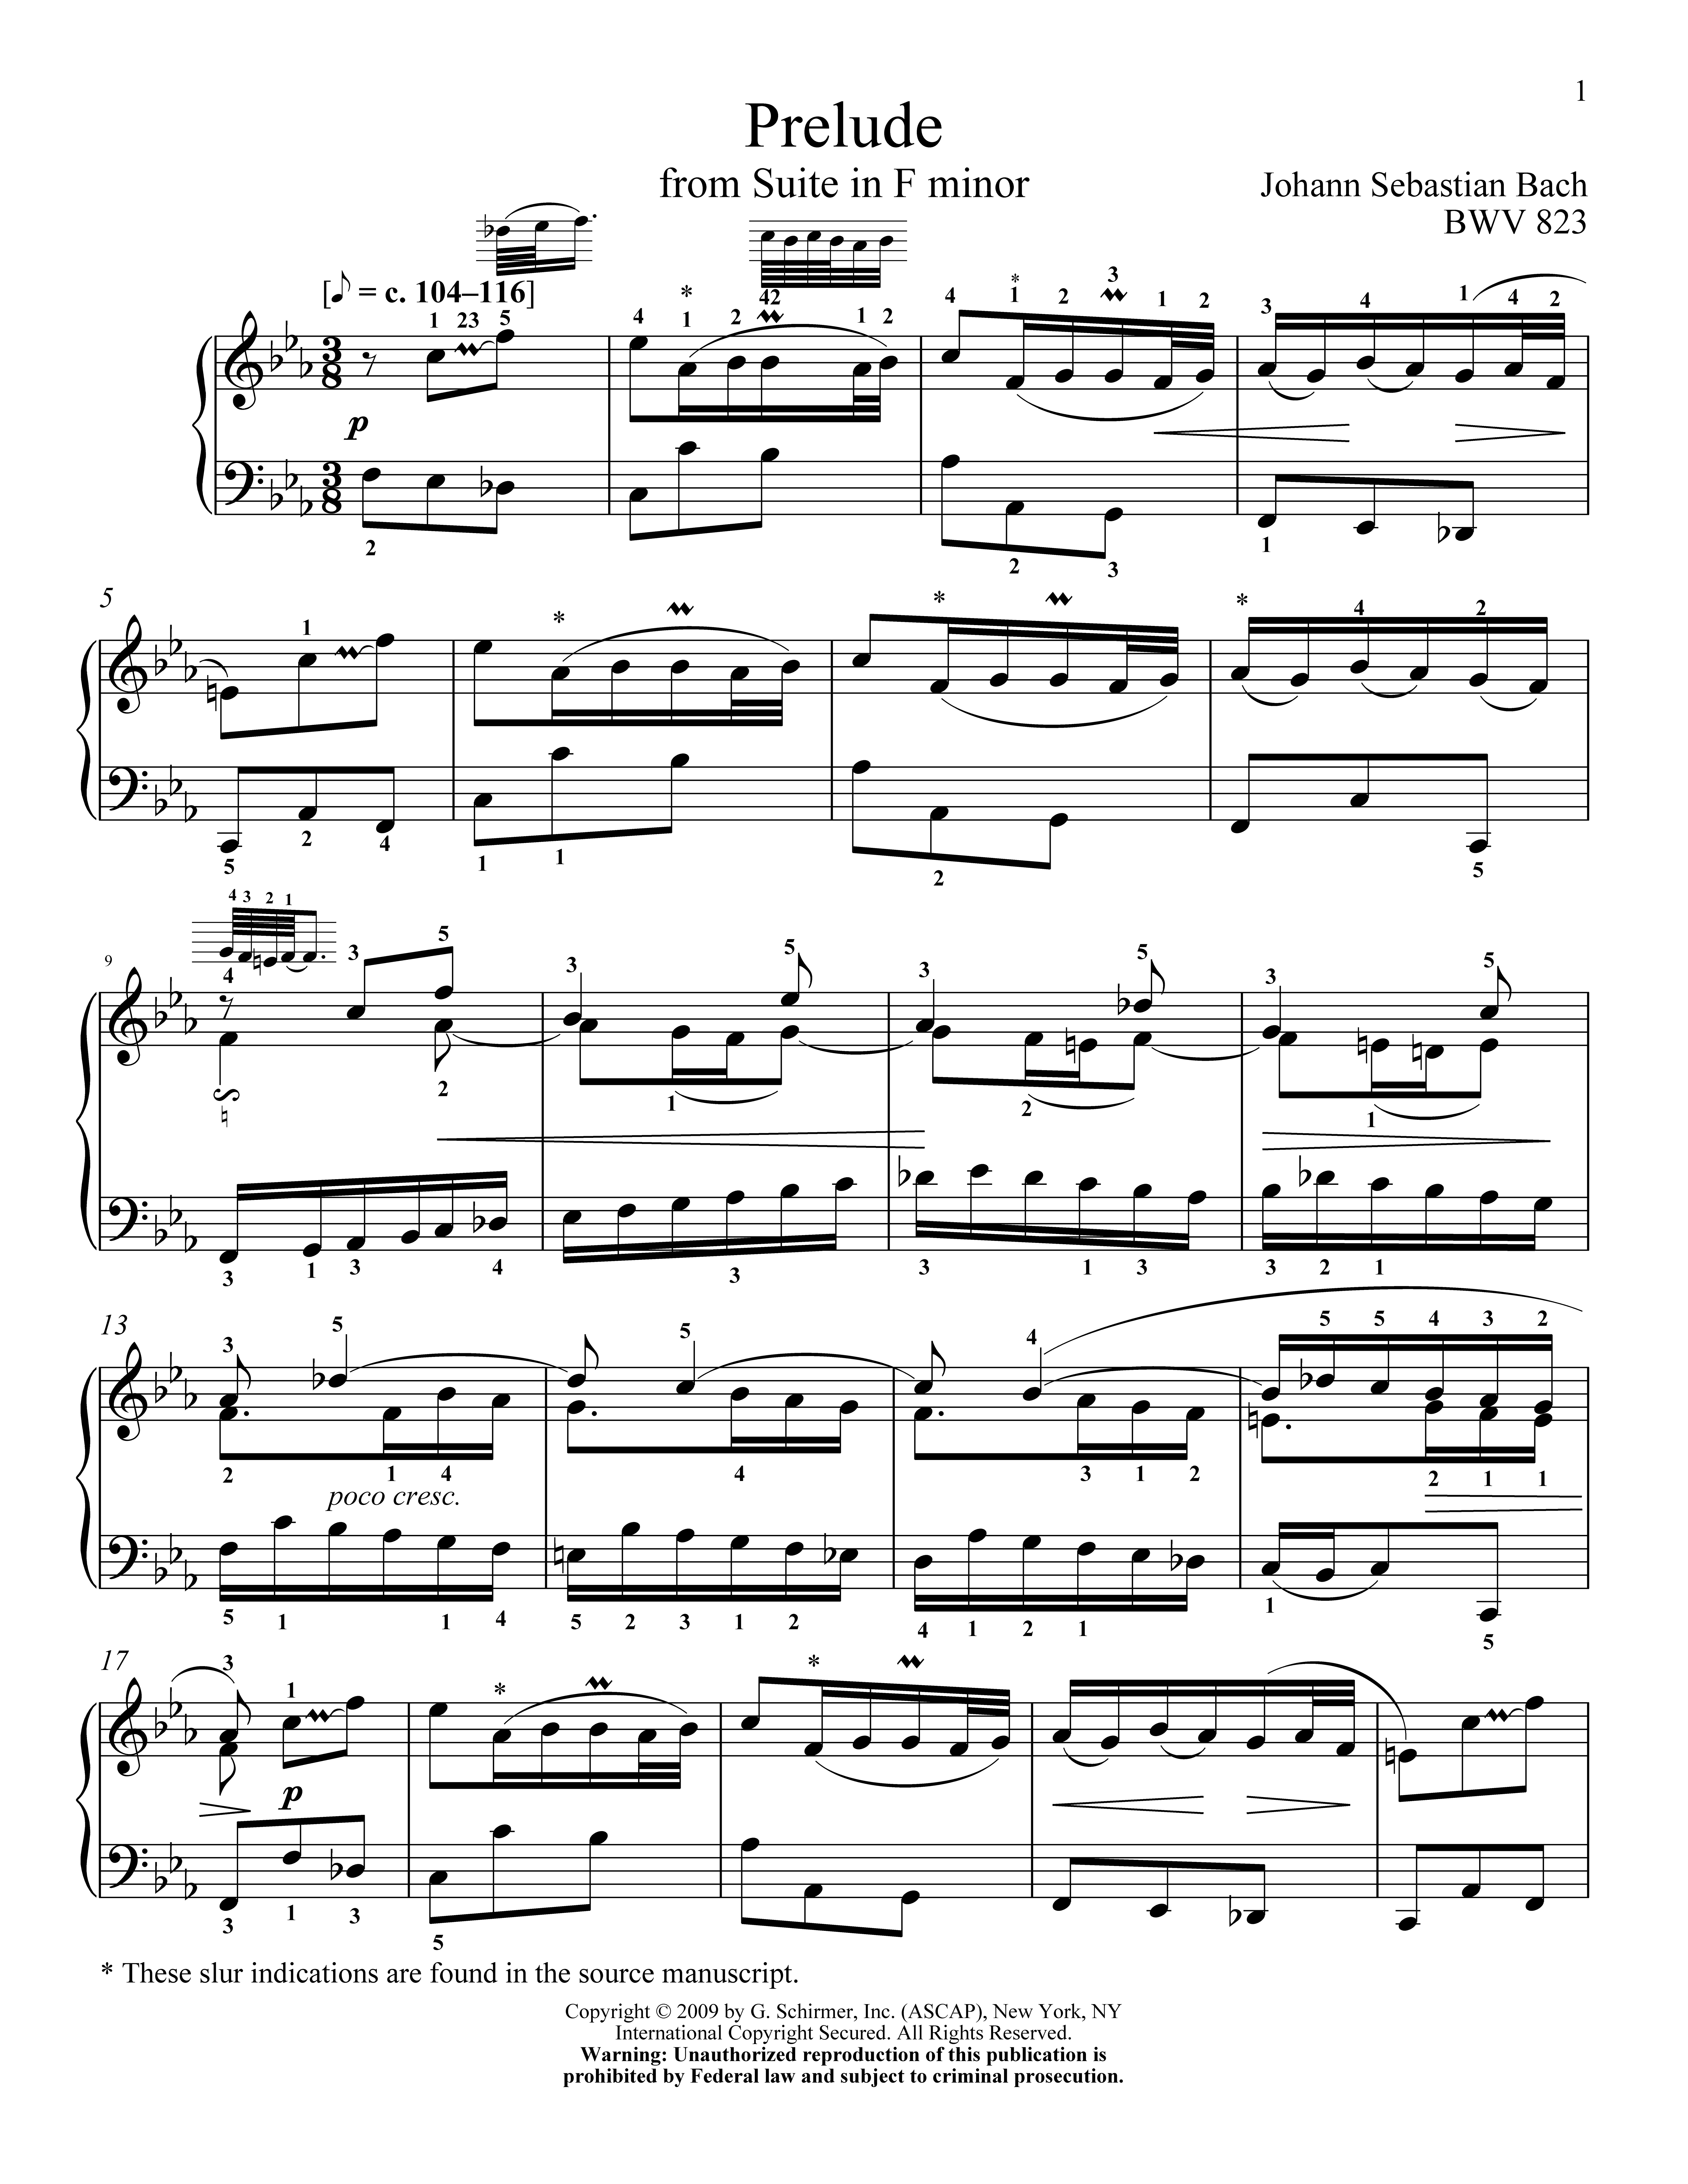 Johann Sebastian Bach Prelude, BWV 823 Sheet Music Notes & Chords for Piano Solo - Download or Print PDF